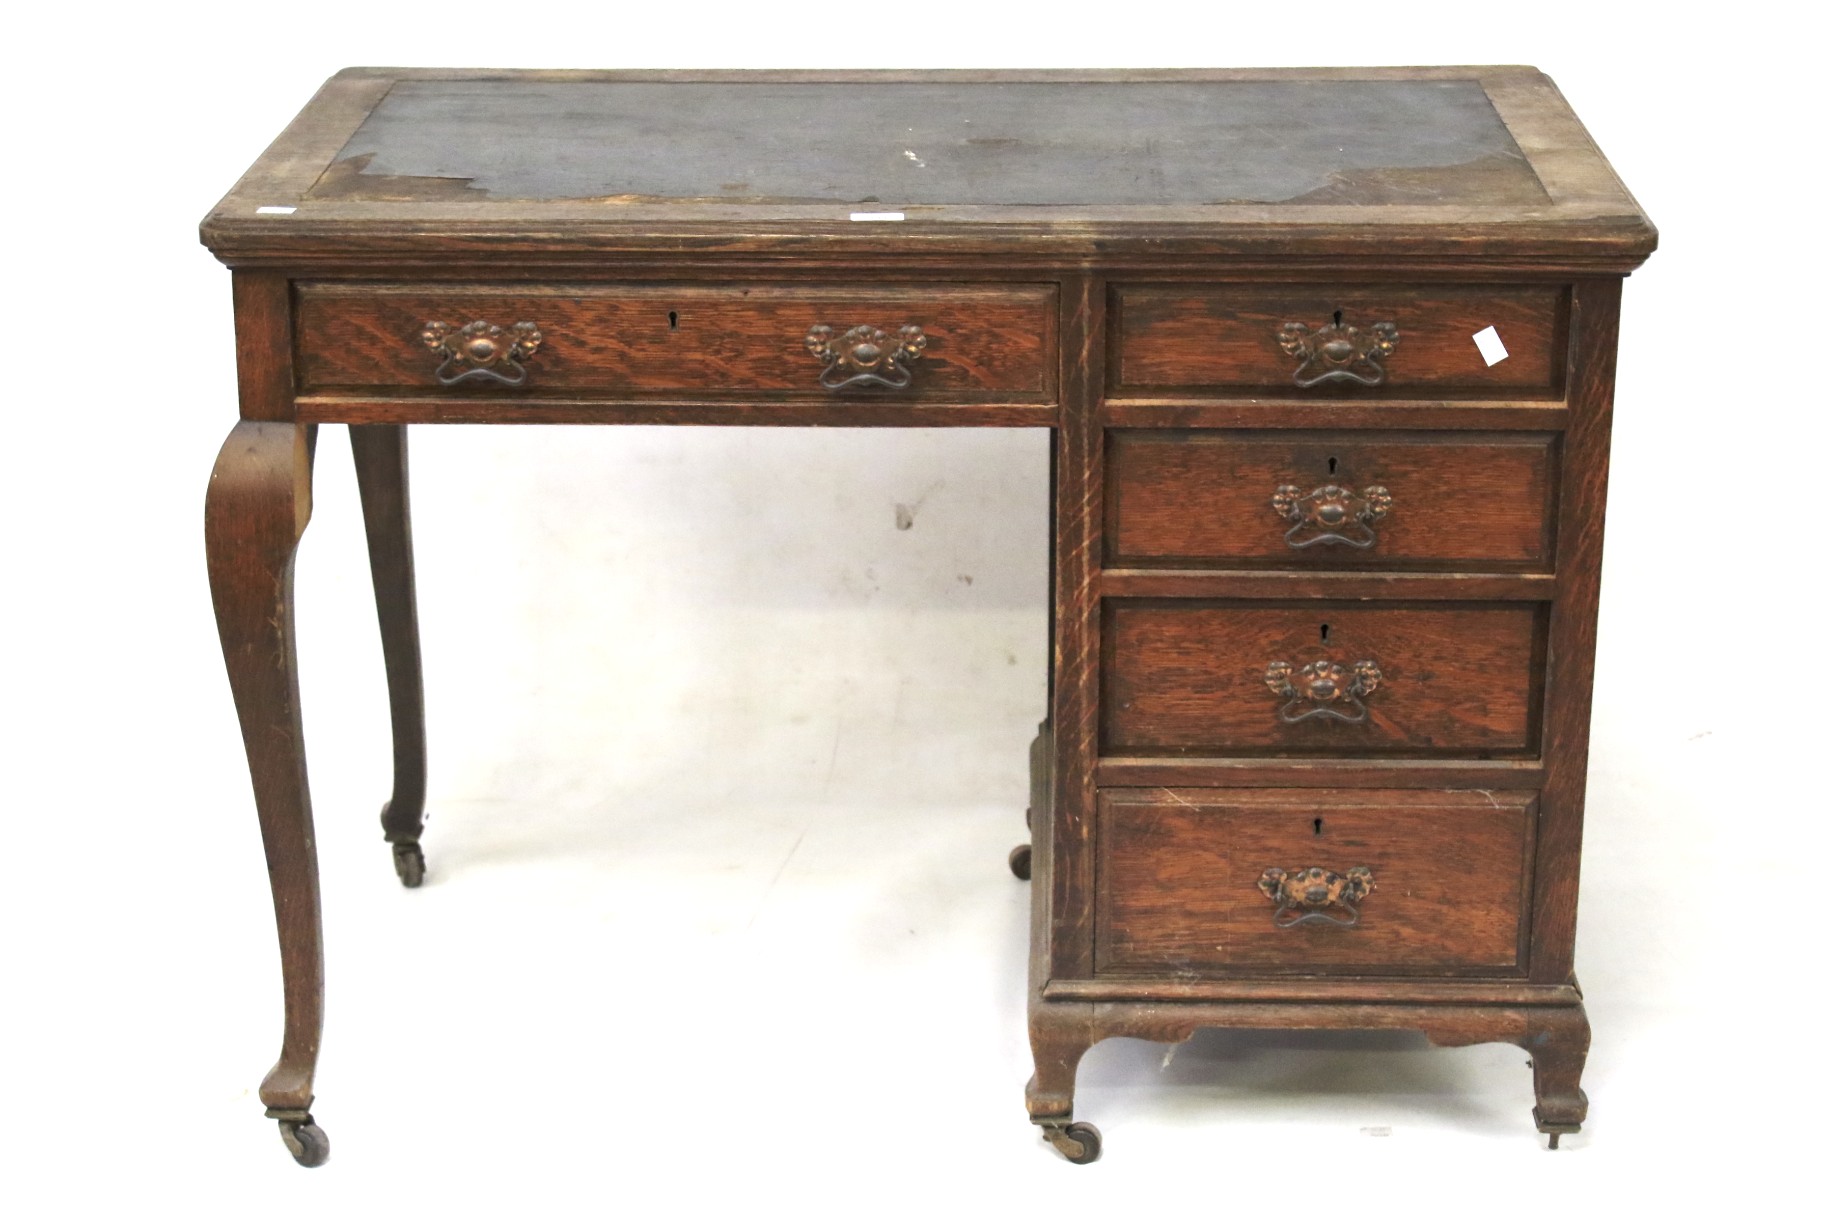 An oak desk complete with 5 drawers, on wheels. H76cm x W105cm x D60cm.